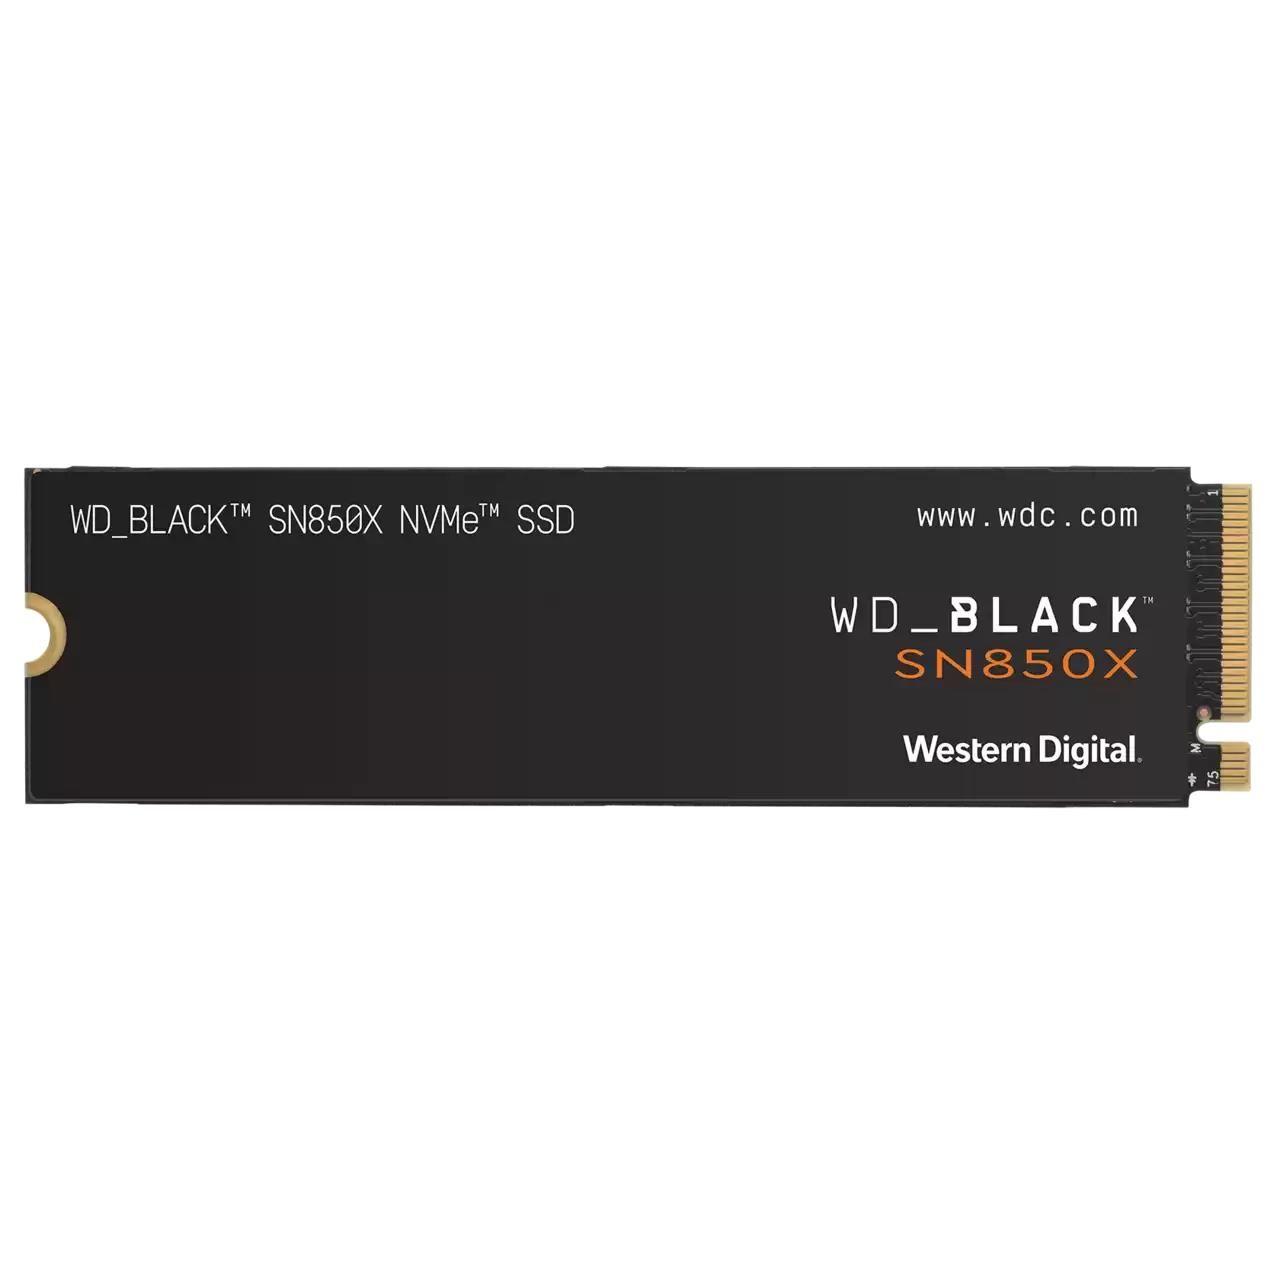 Sandisk WD Black SN850X